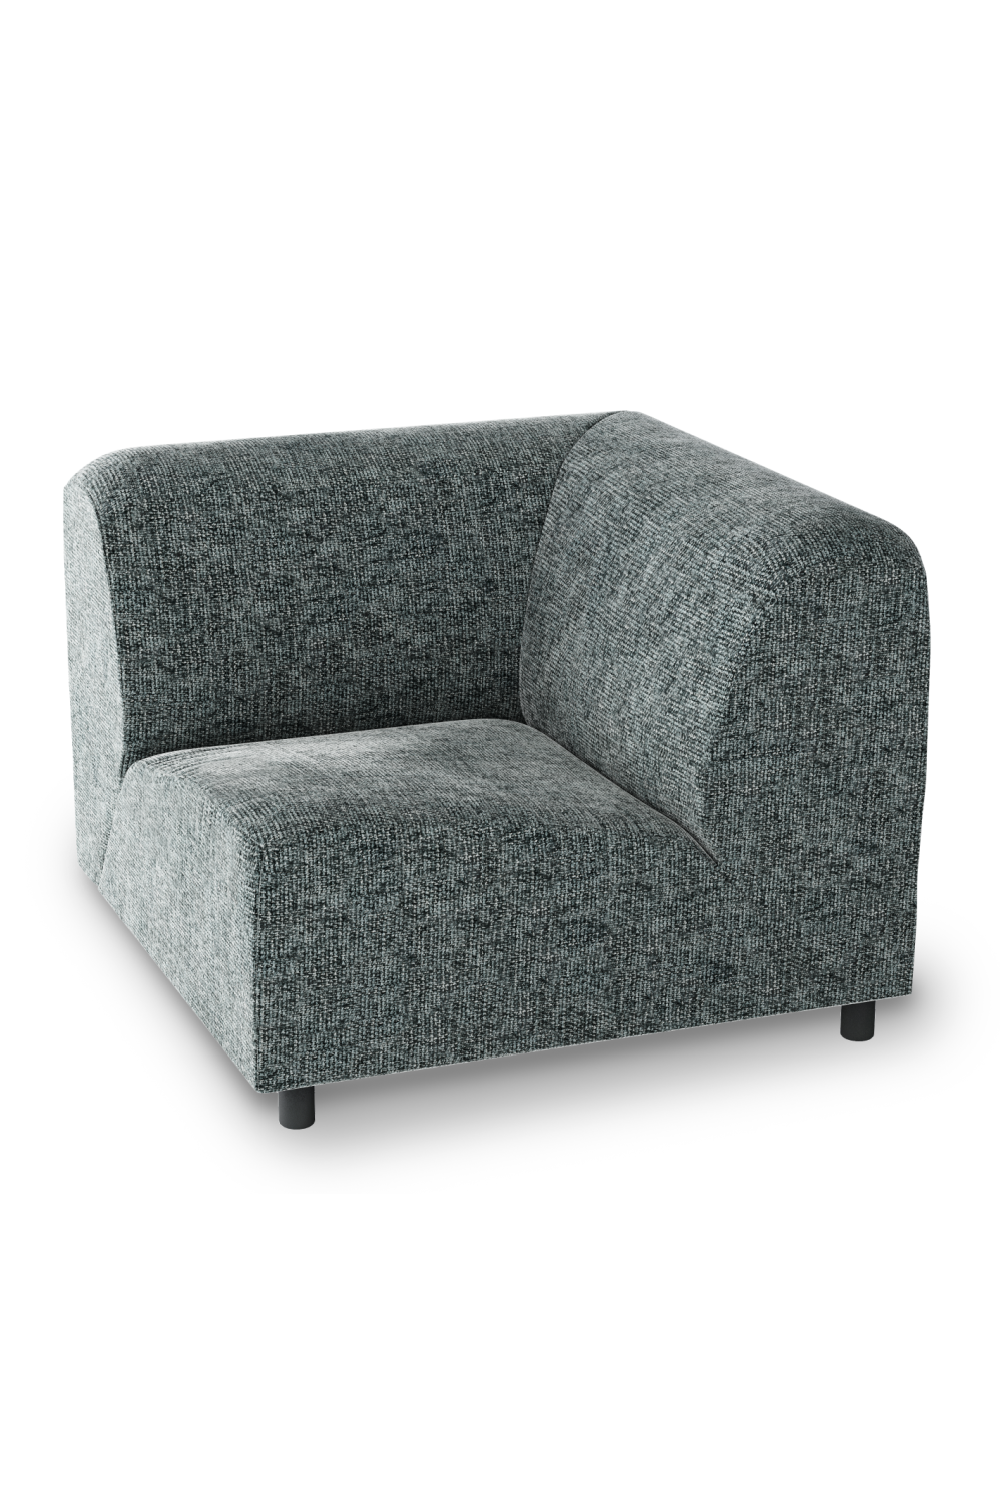 Green Upholstered Modular Sofa | Pols Potten A-Round-U | Oroa.com